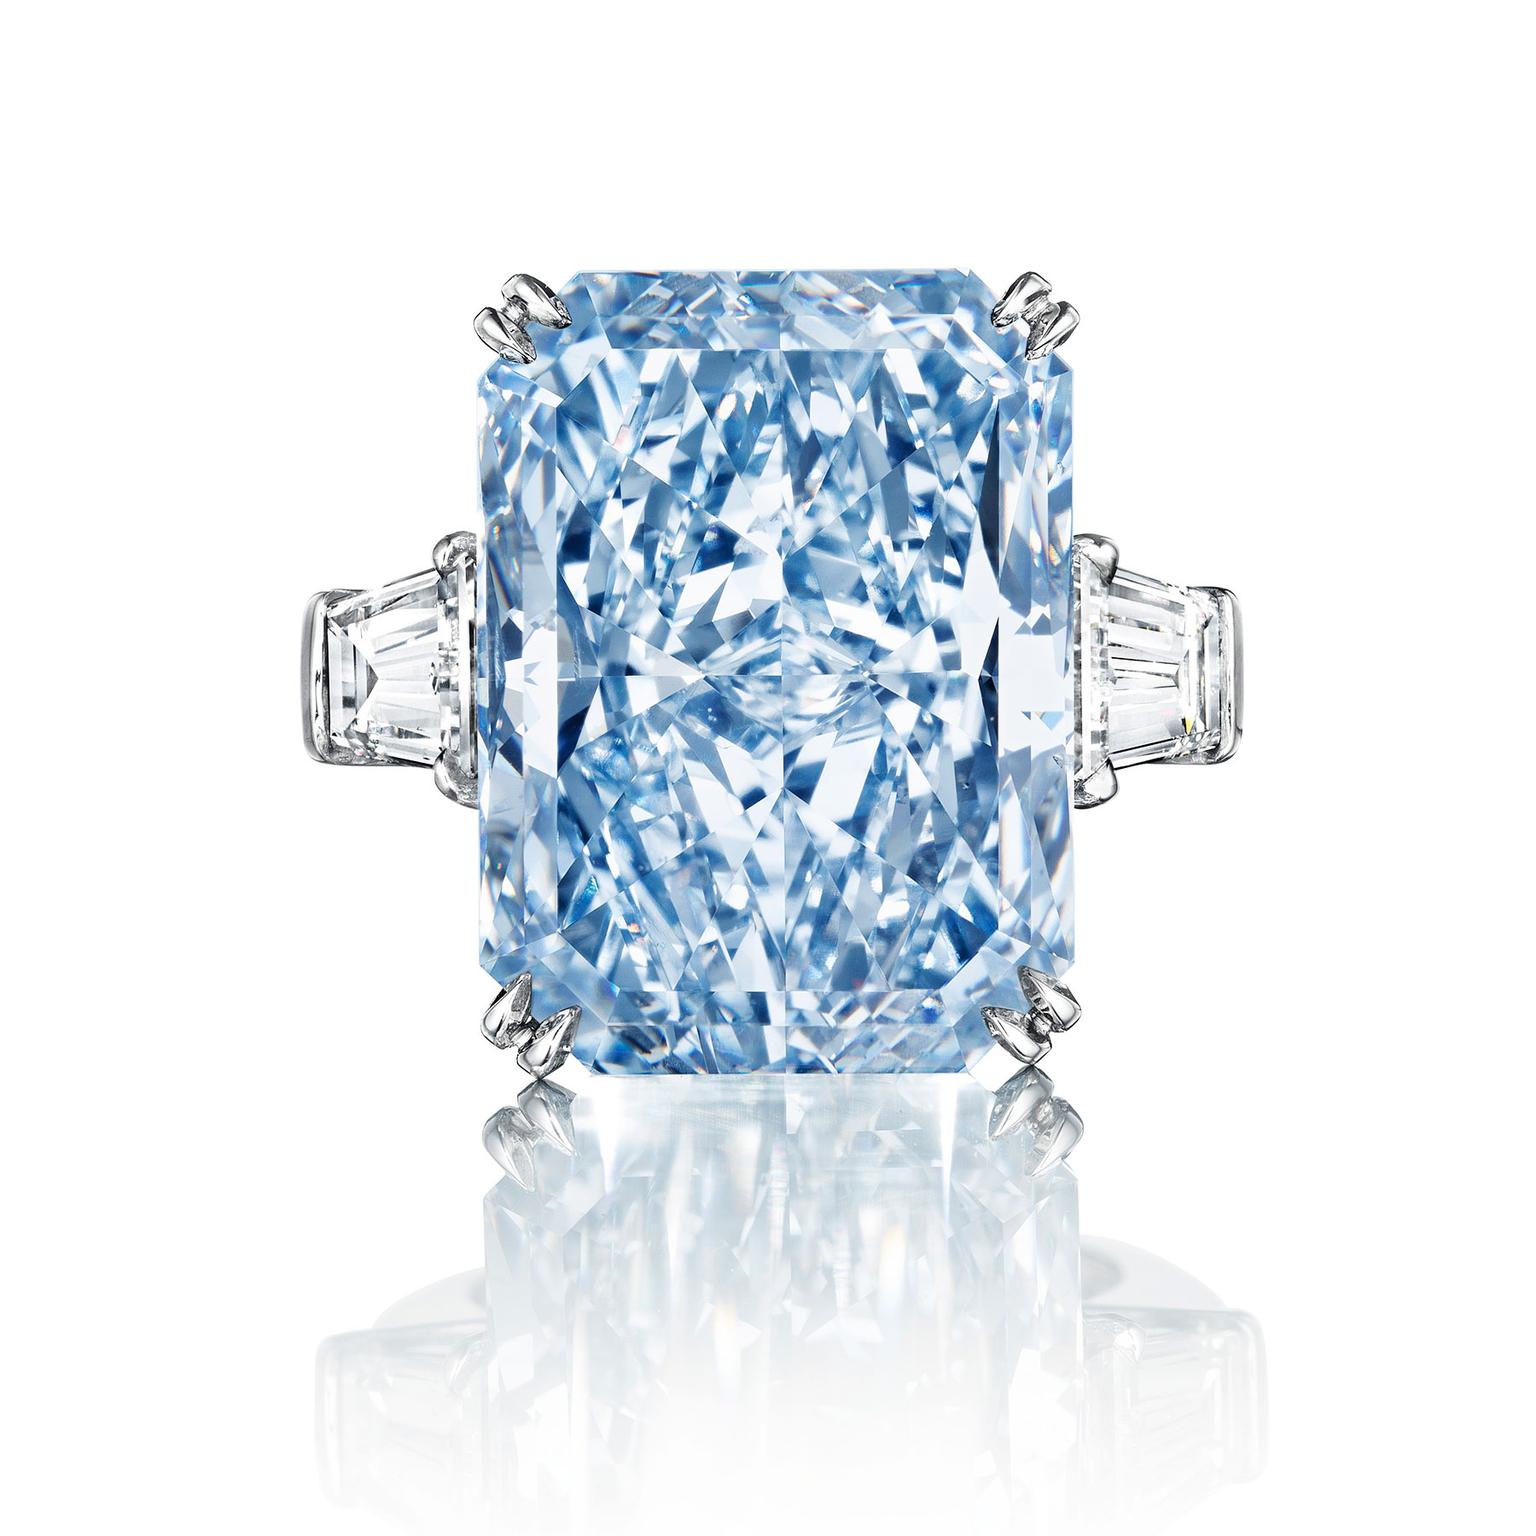 Christie's Cullinan Dream blue diamond ring